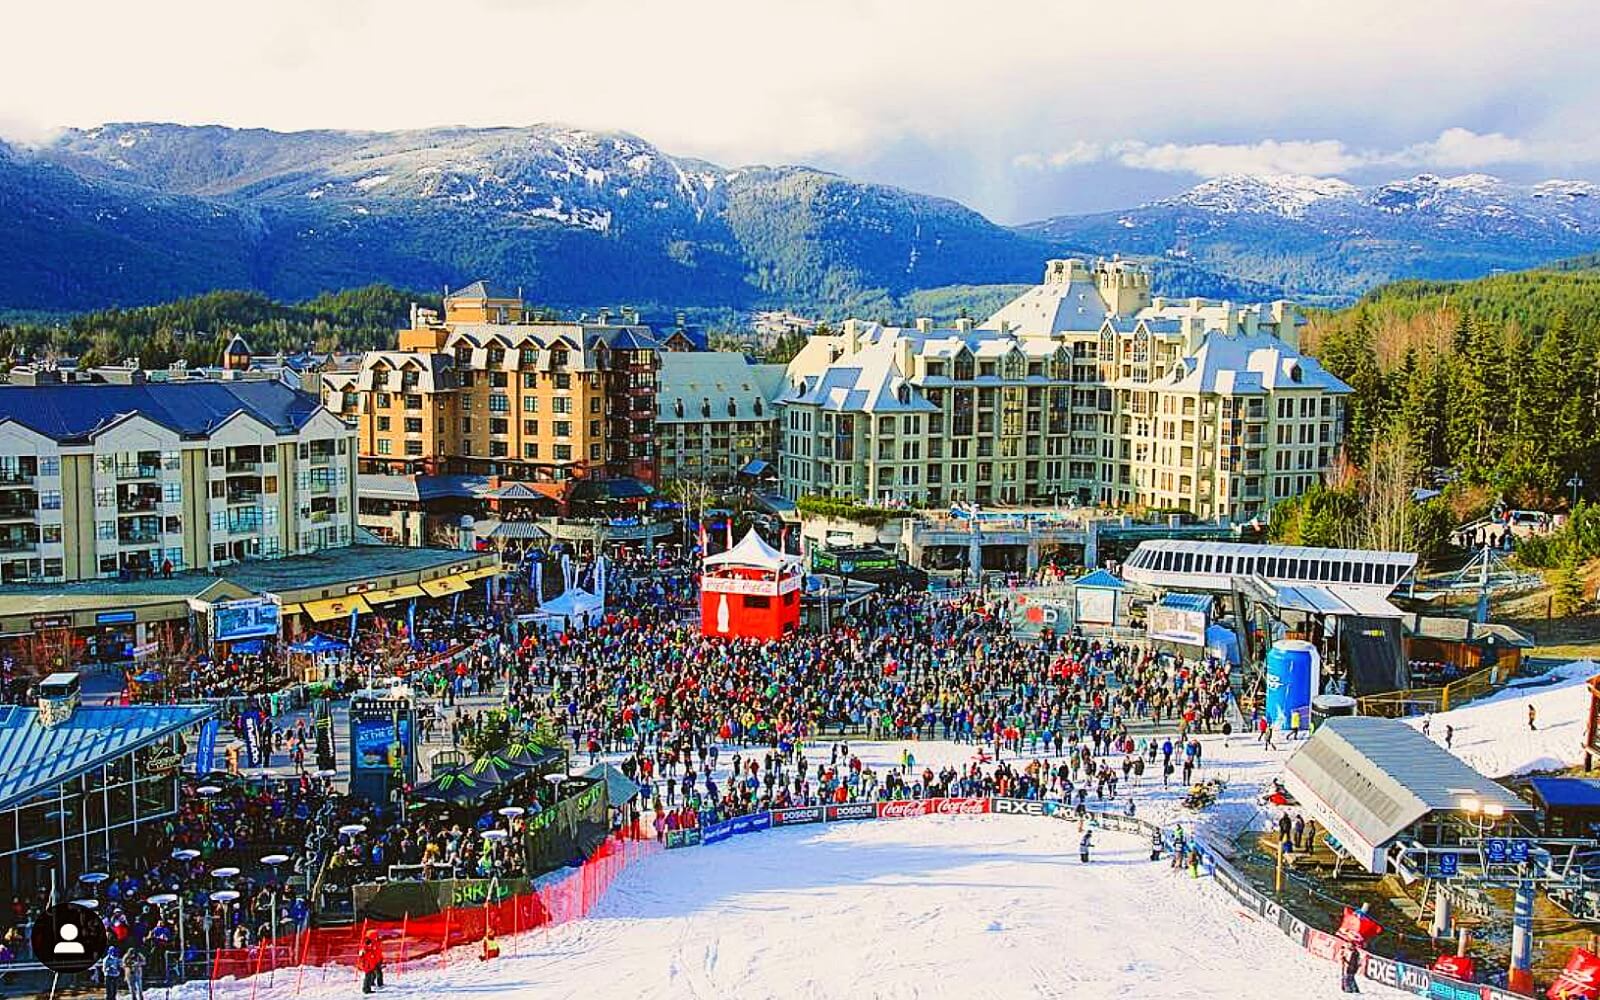 A crowd fill Whistler Village at the World Ski & Snowboard Festival